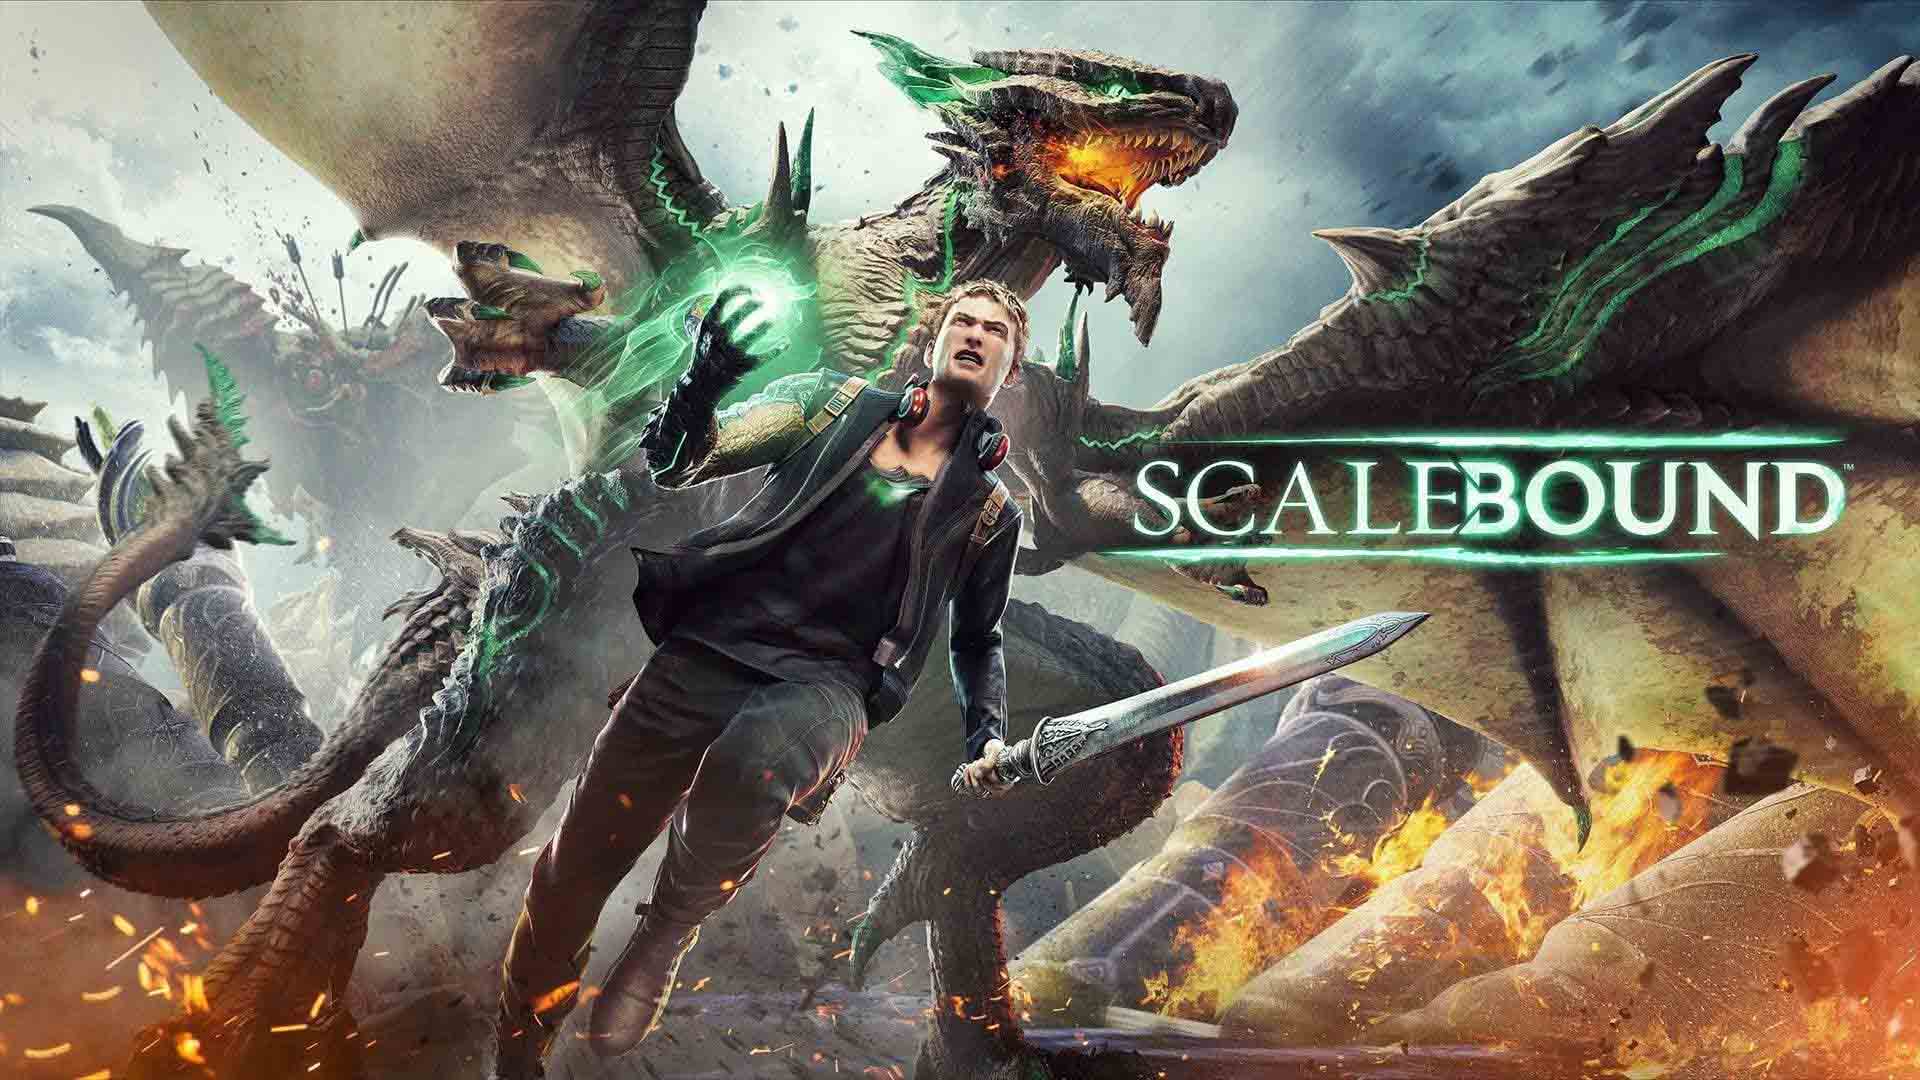 فیل اسپنسر شایعات پیرامون بازی Scalebound را تکذیب کرد